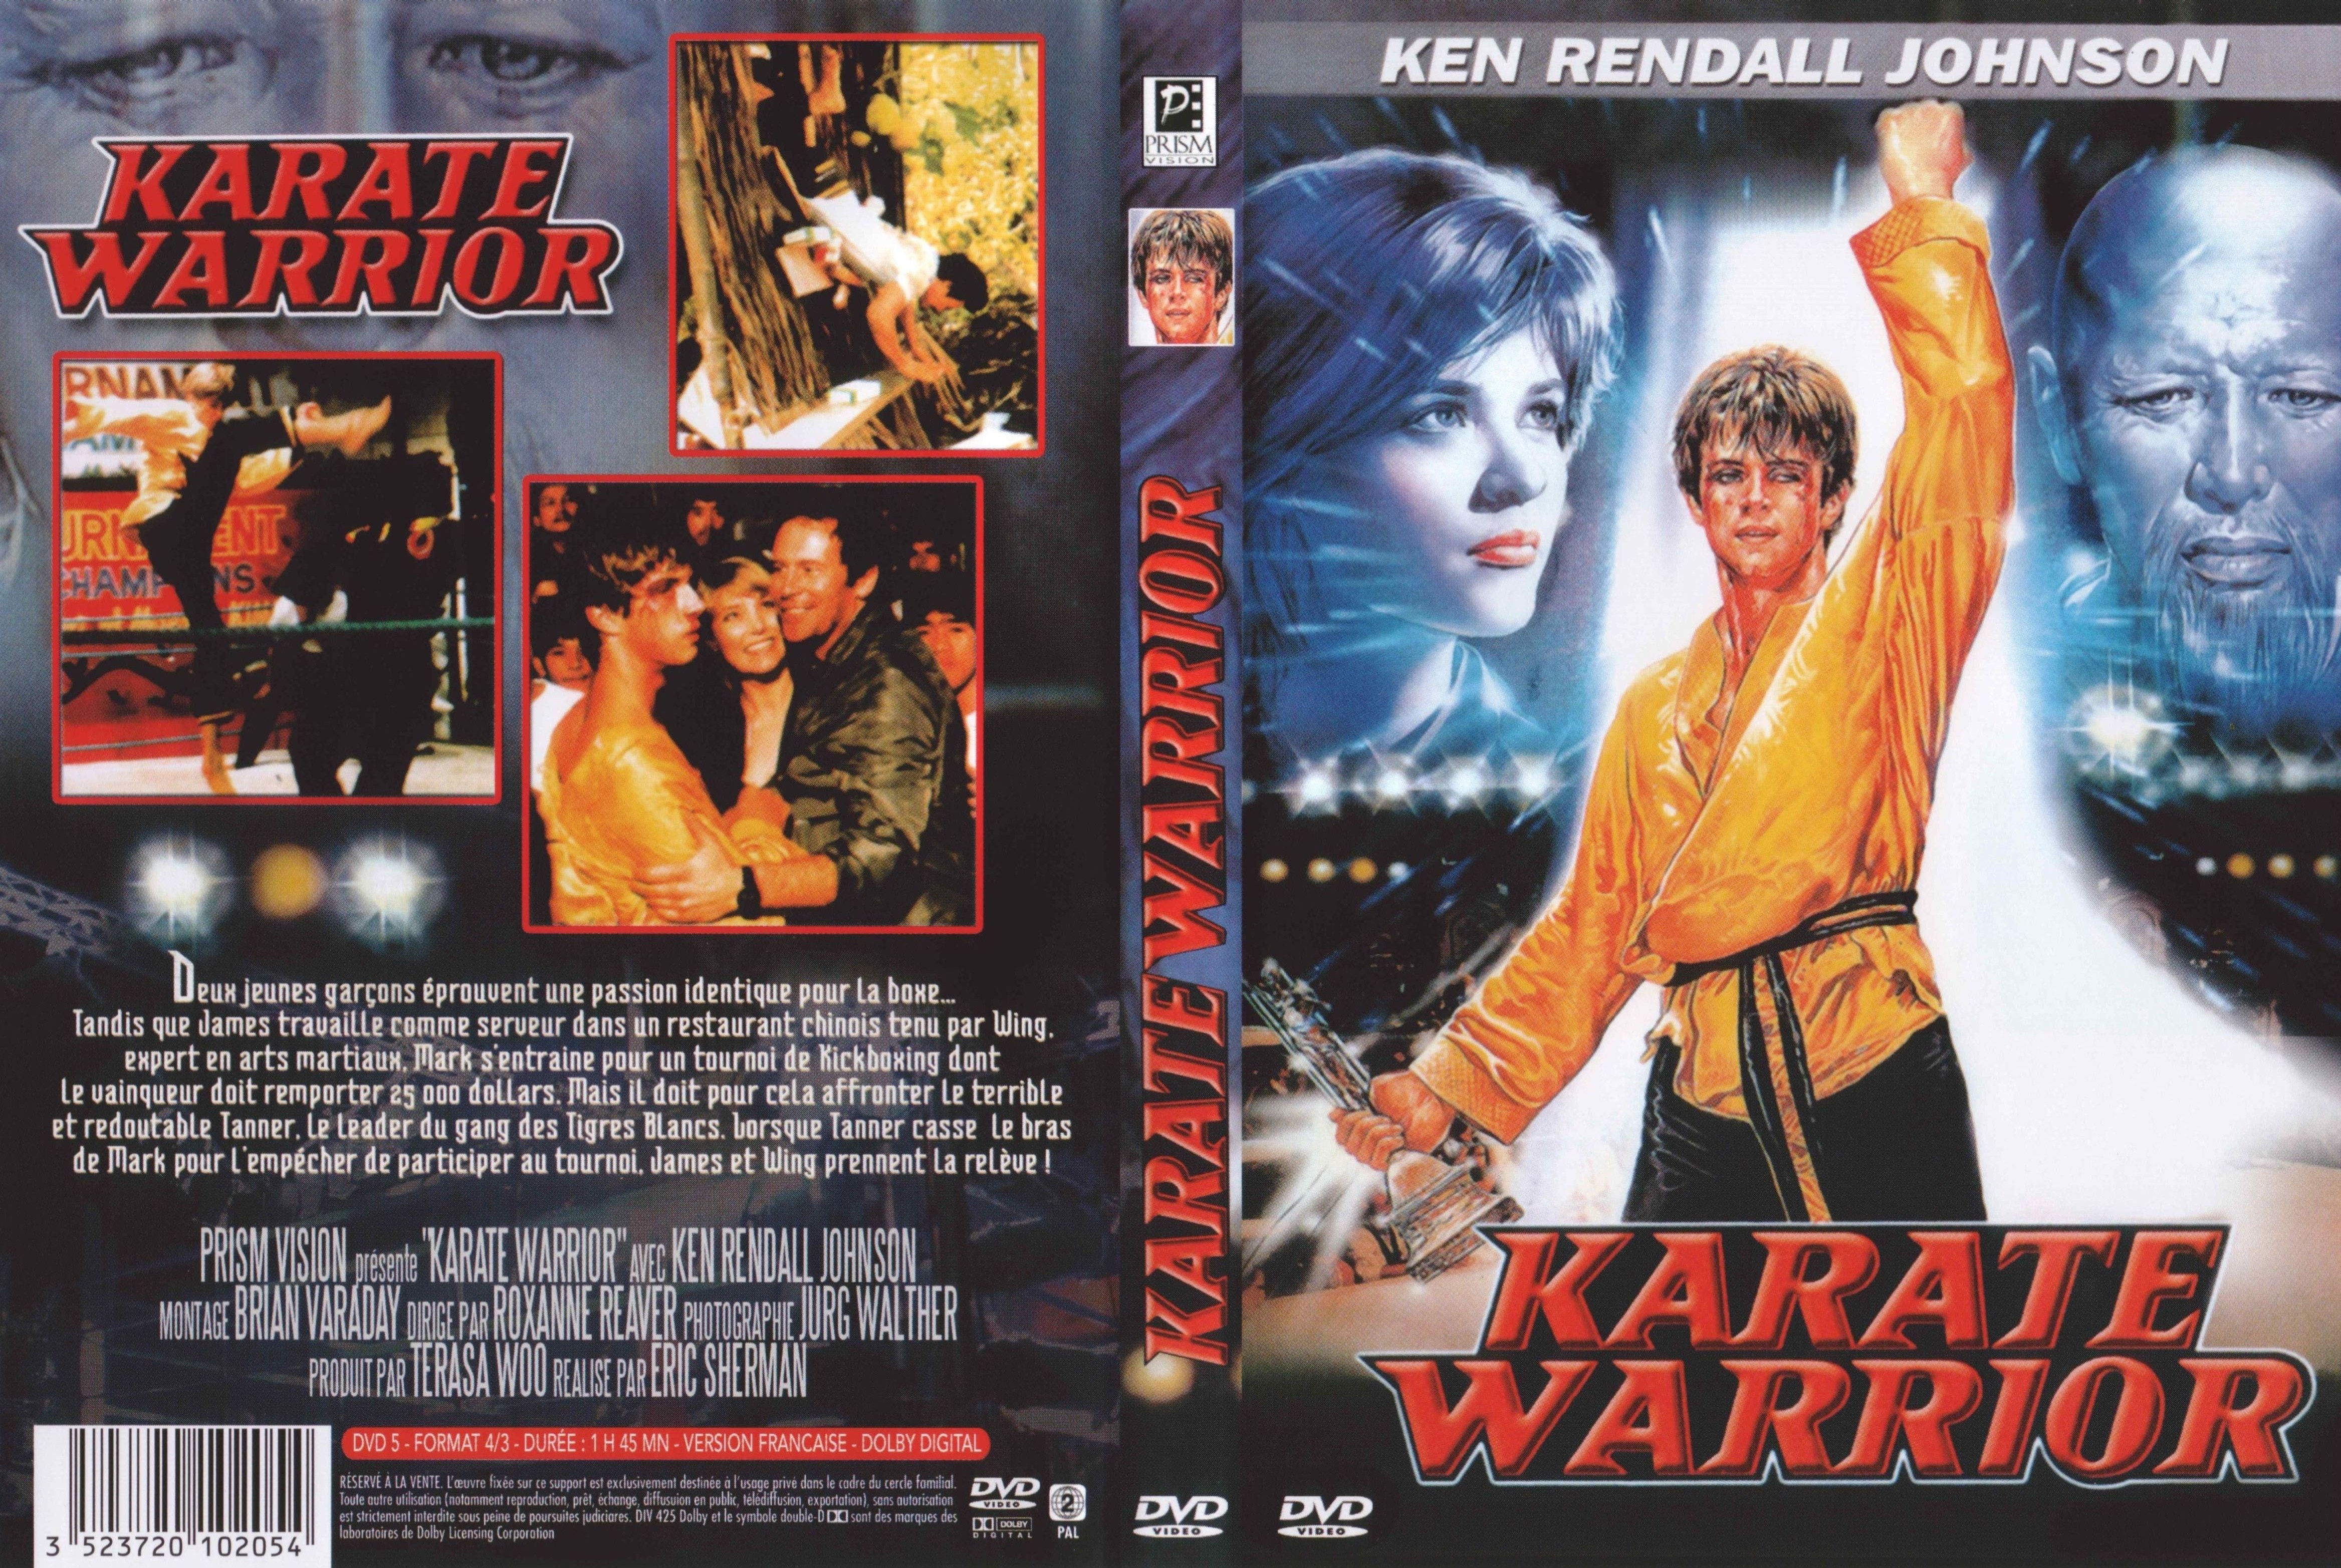 Jaquette DVD Karate warrior